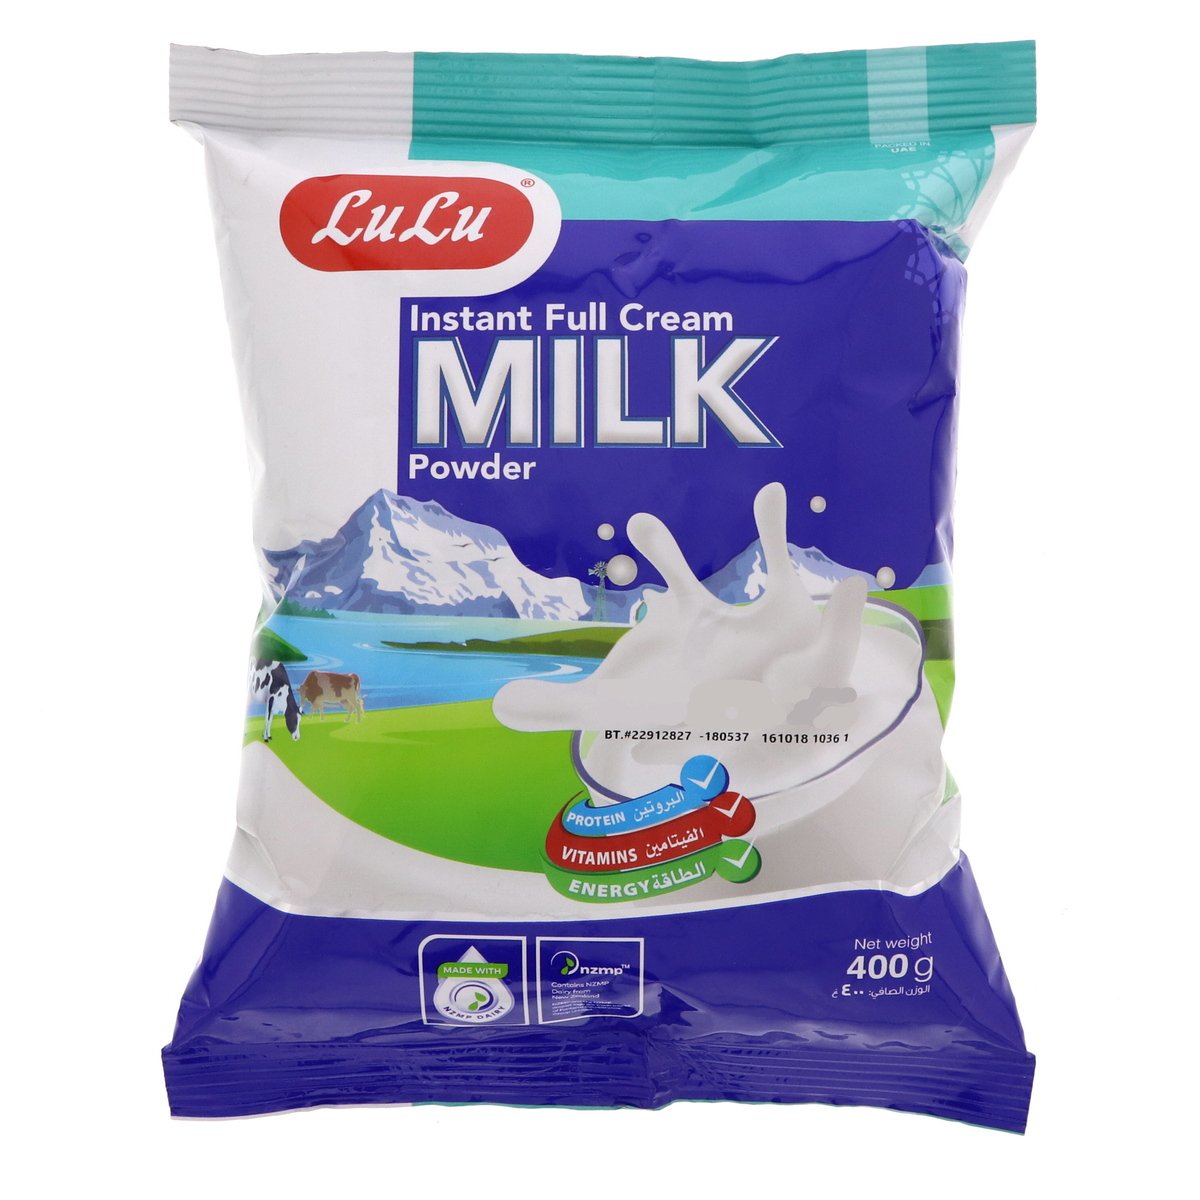 LuLu Instant Full Cream Milk Powder 400 g